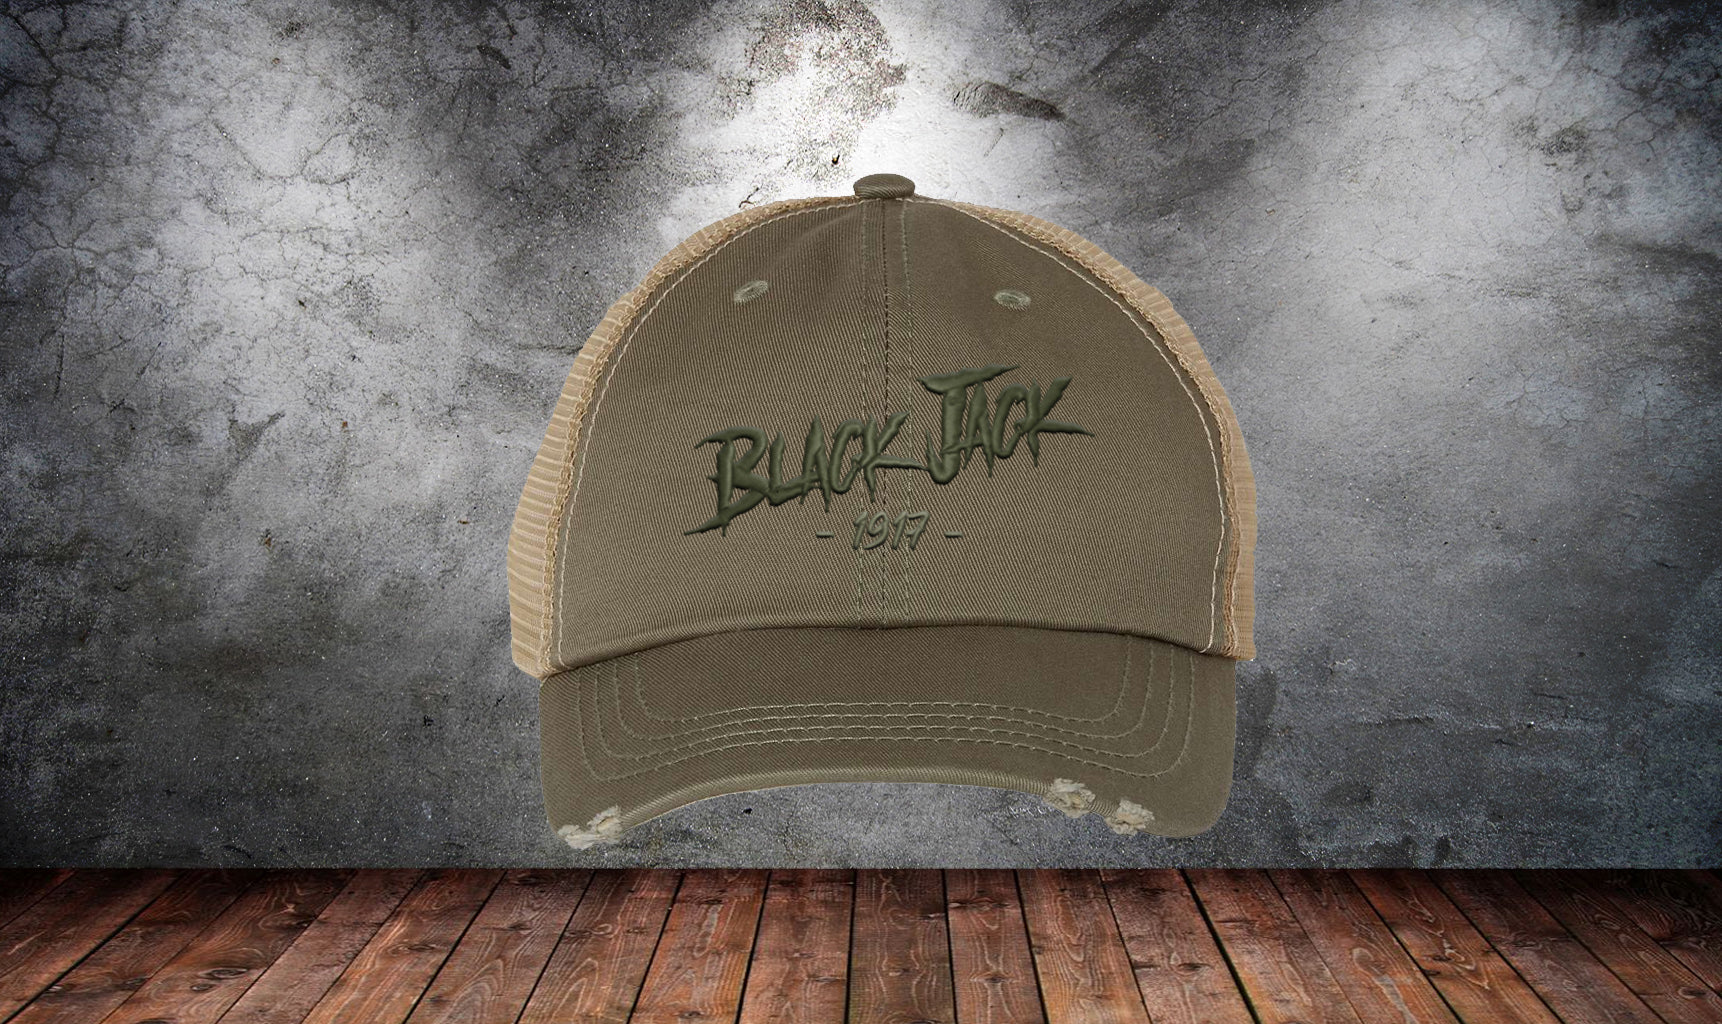 Black Jack 1917 Dad Hats